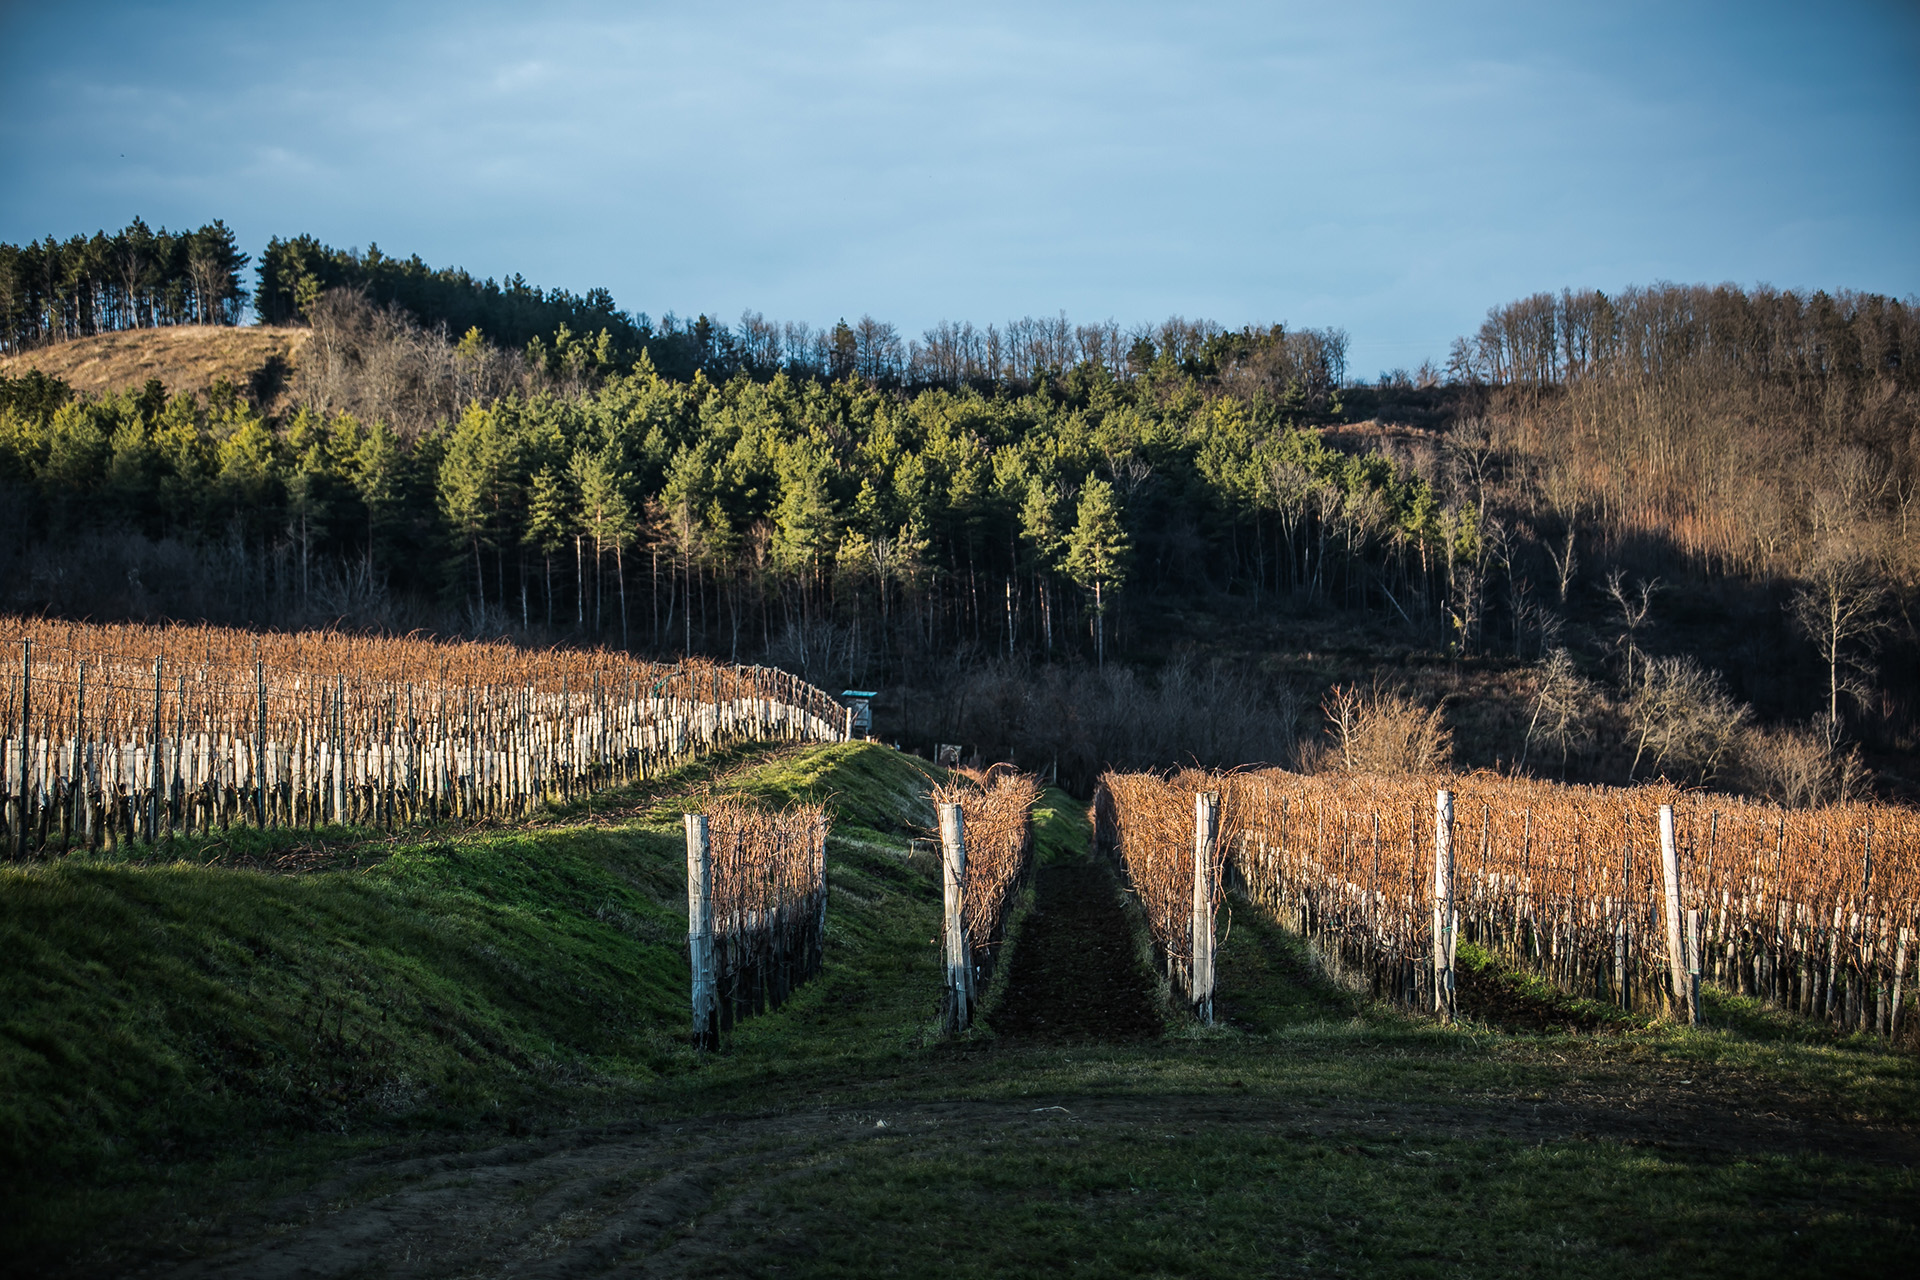 Vineyards somewhere in the Szekszárd's hills